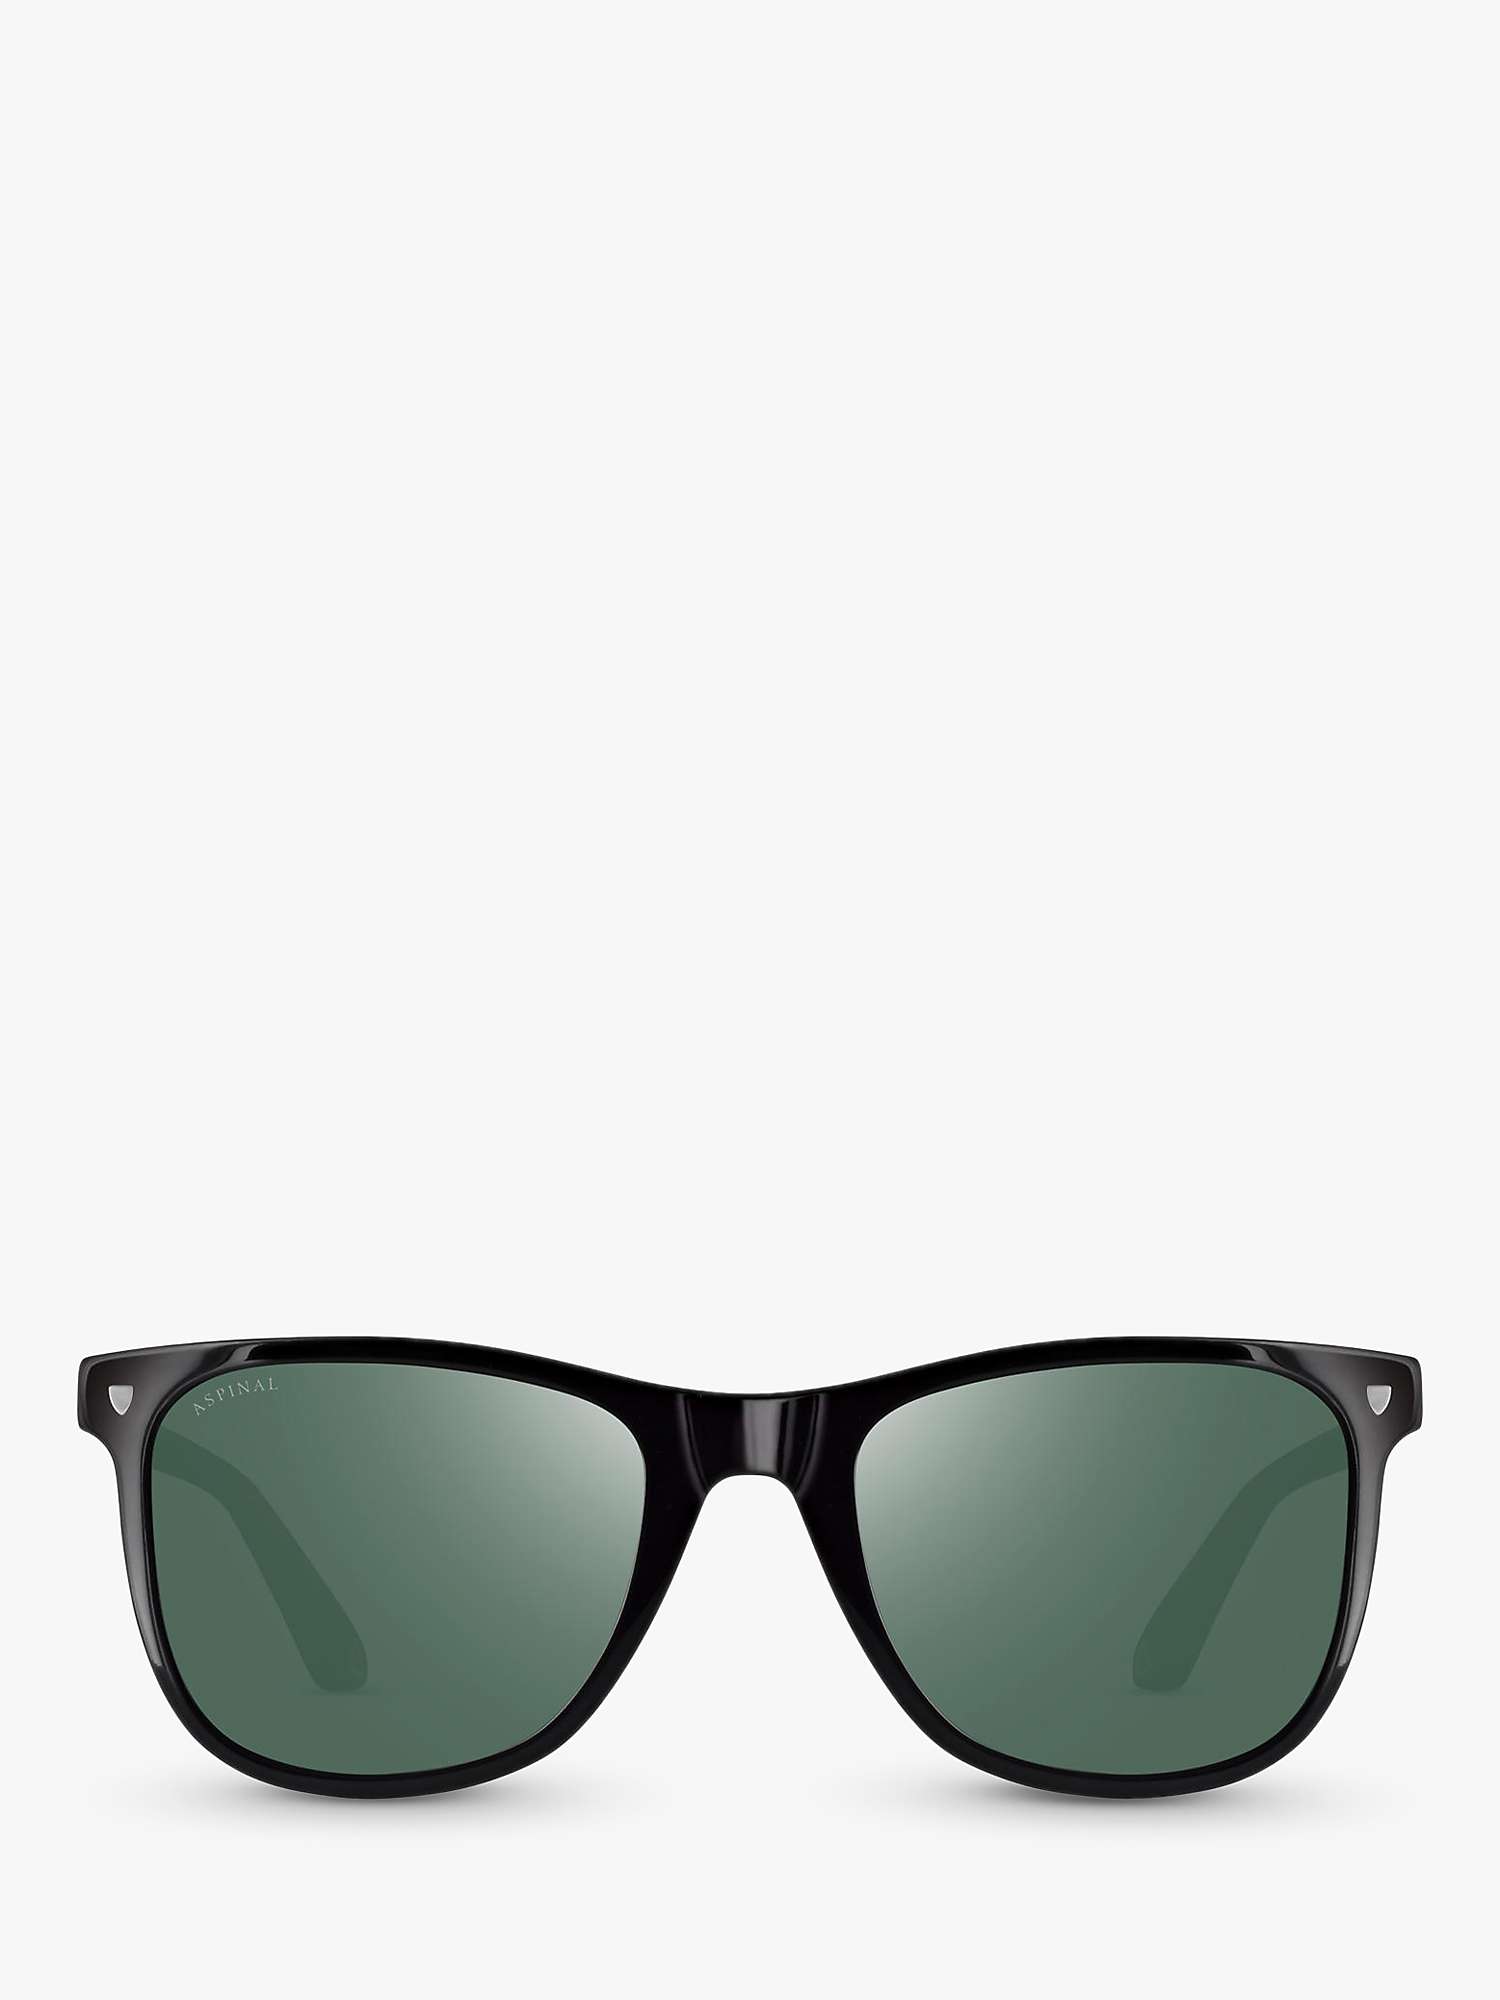 Buy Aspinal of London Men's Milano D-Frame Sunglasses Online at johnlewis.com